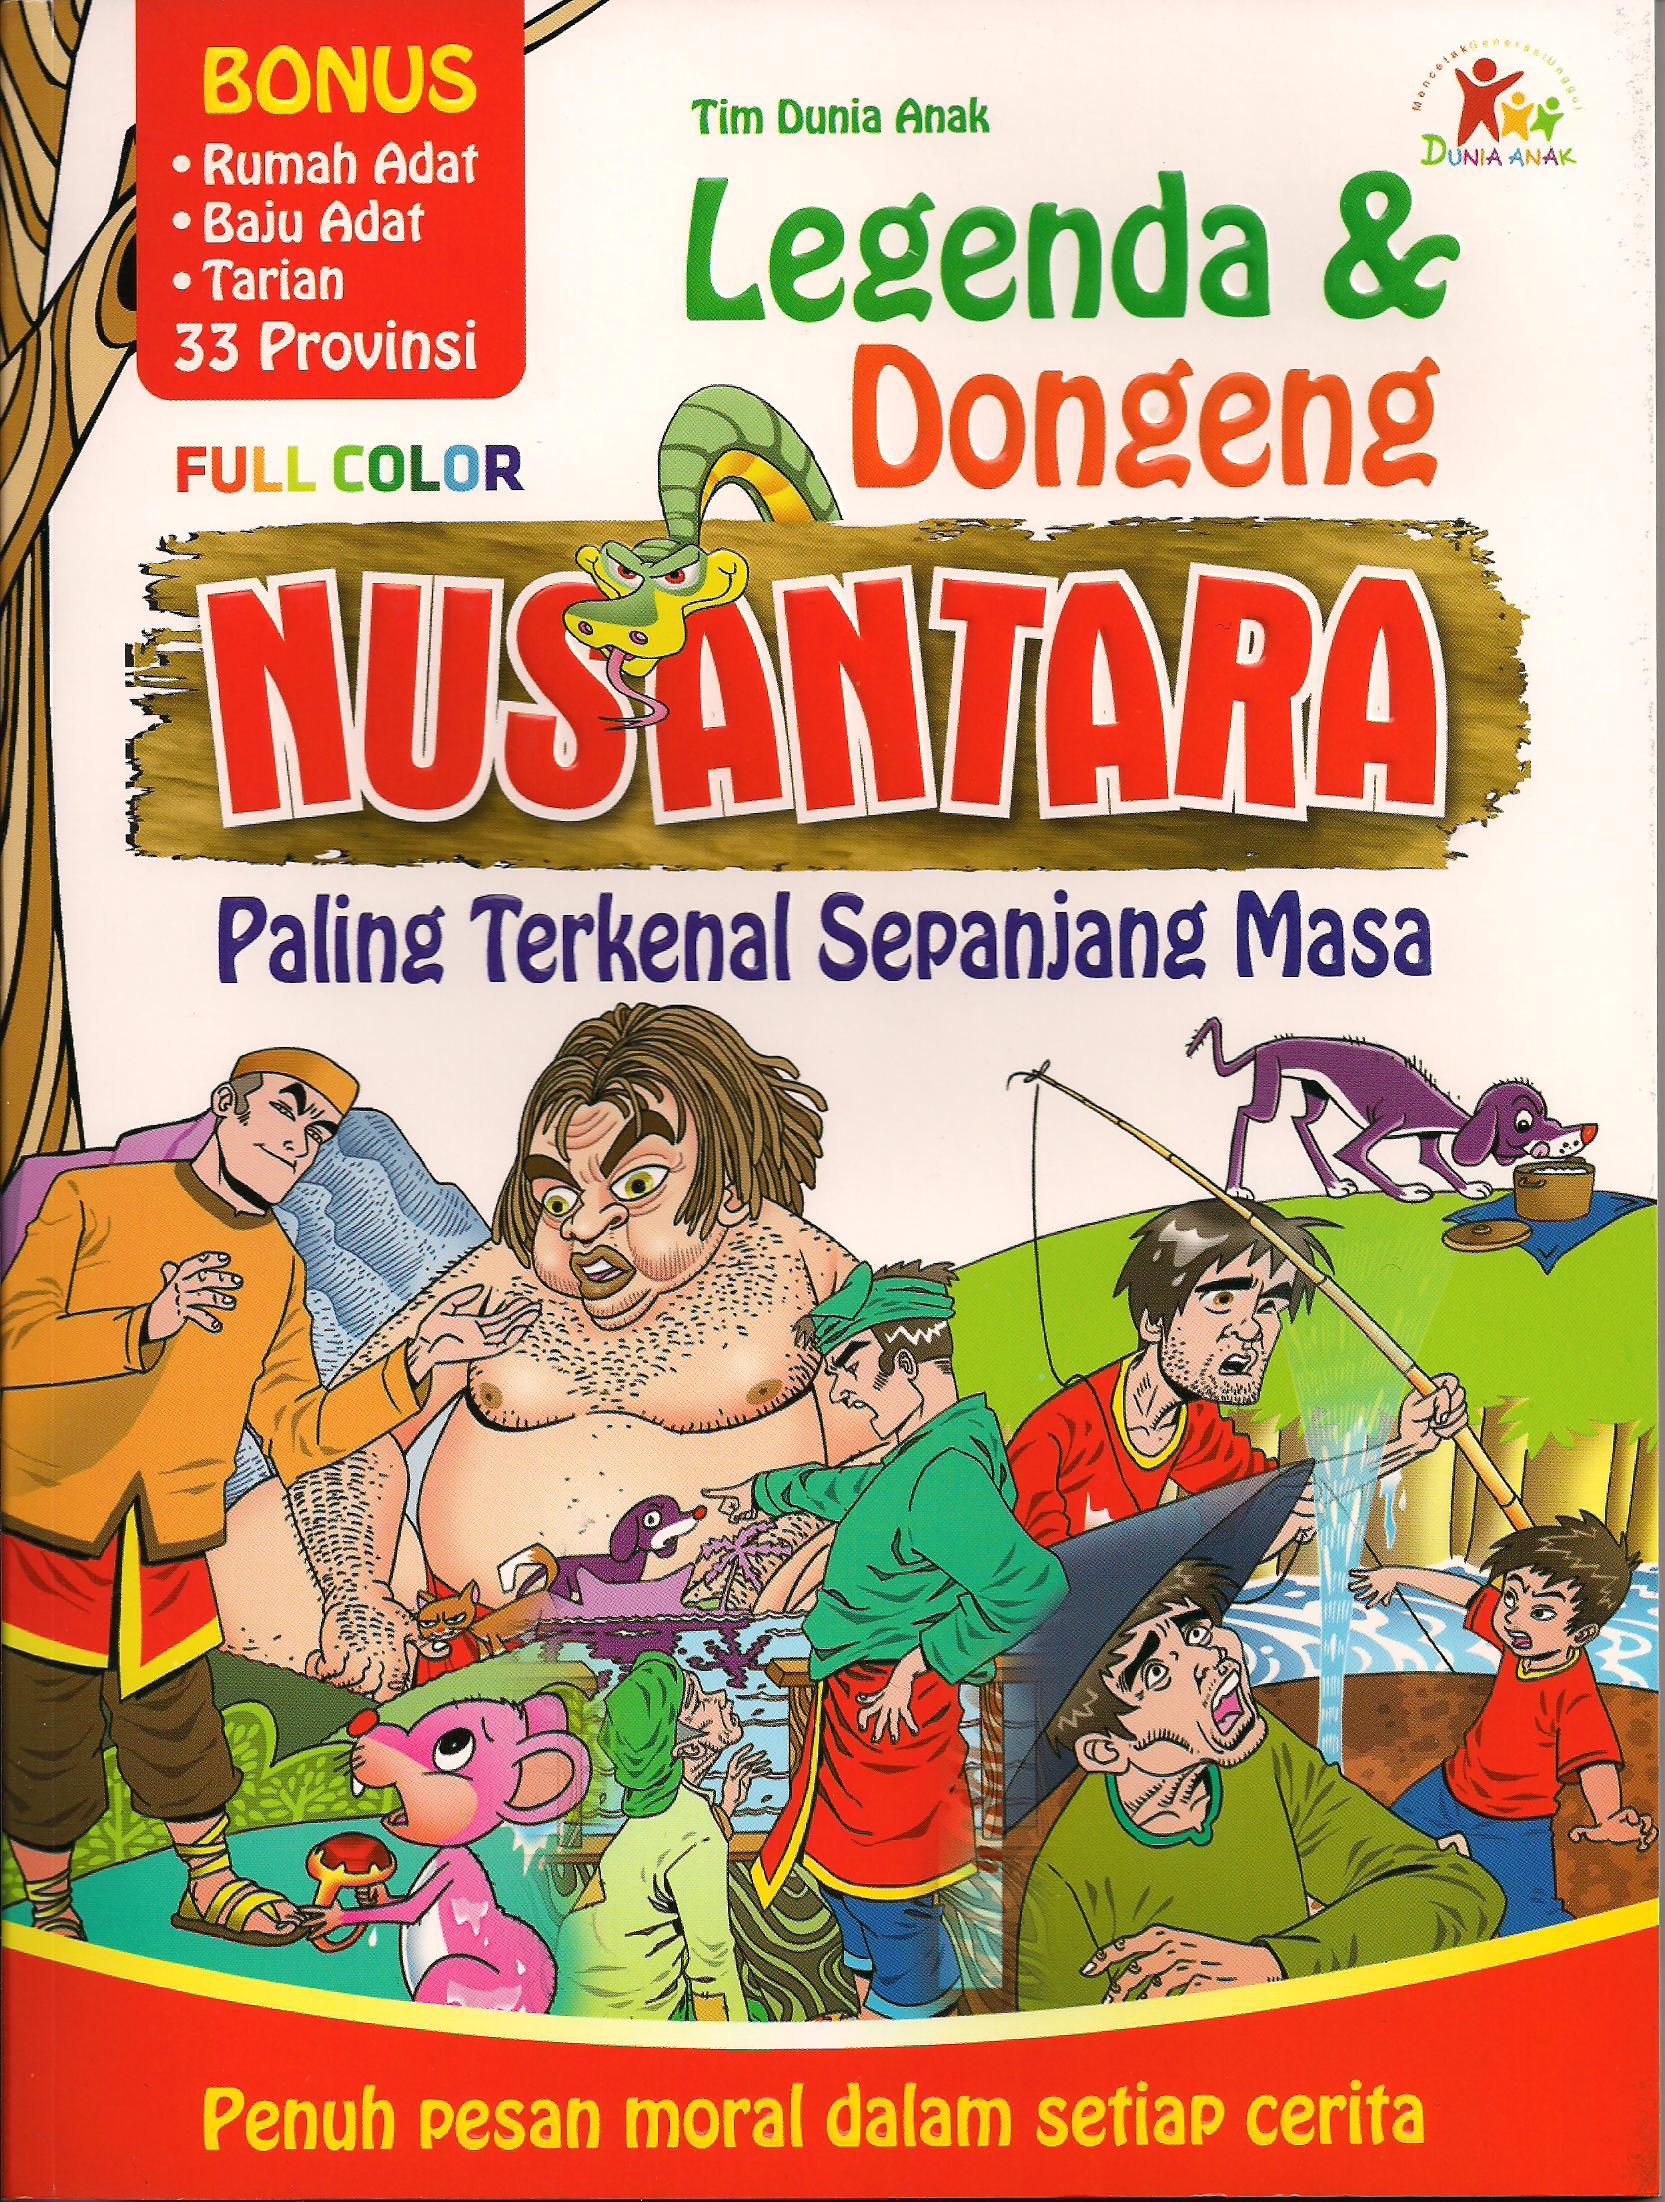 Katalog Buku Cerita Rakyat Indonesia Indonesian Education And